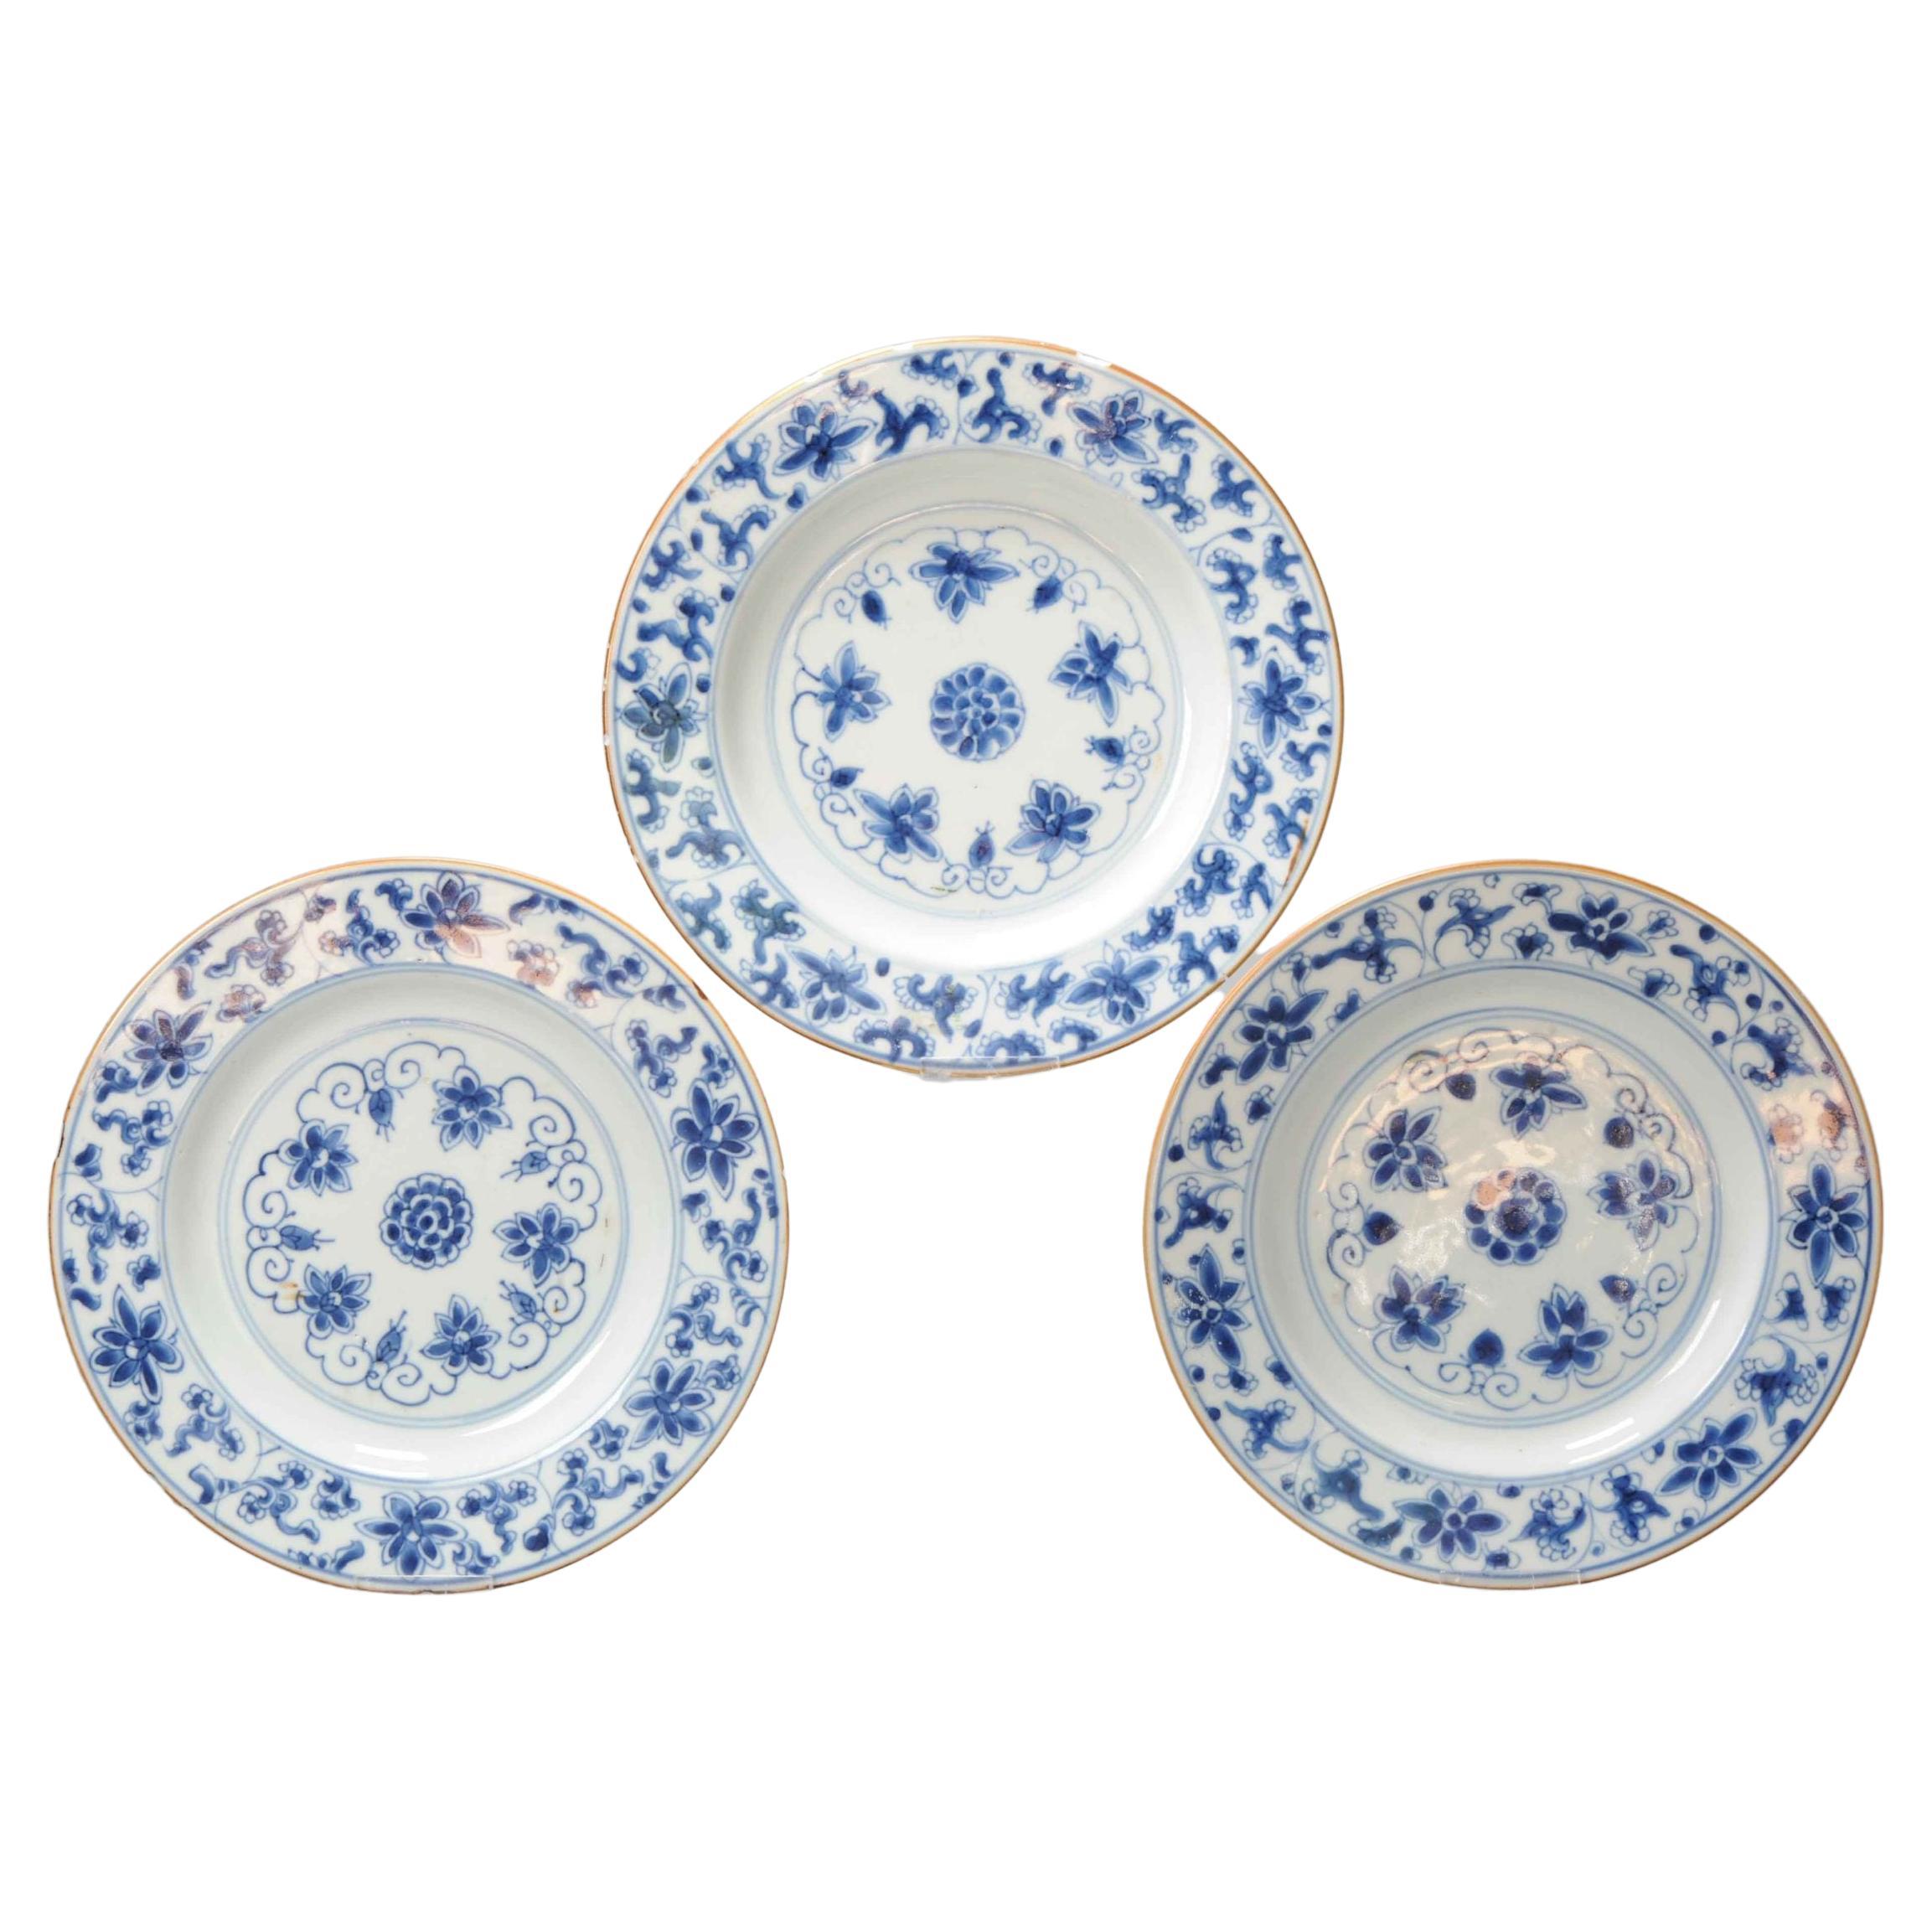 Set of 3 Antique Chinese Porcelain Blue White Dinner Plates, 18th C